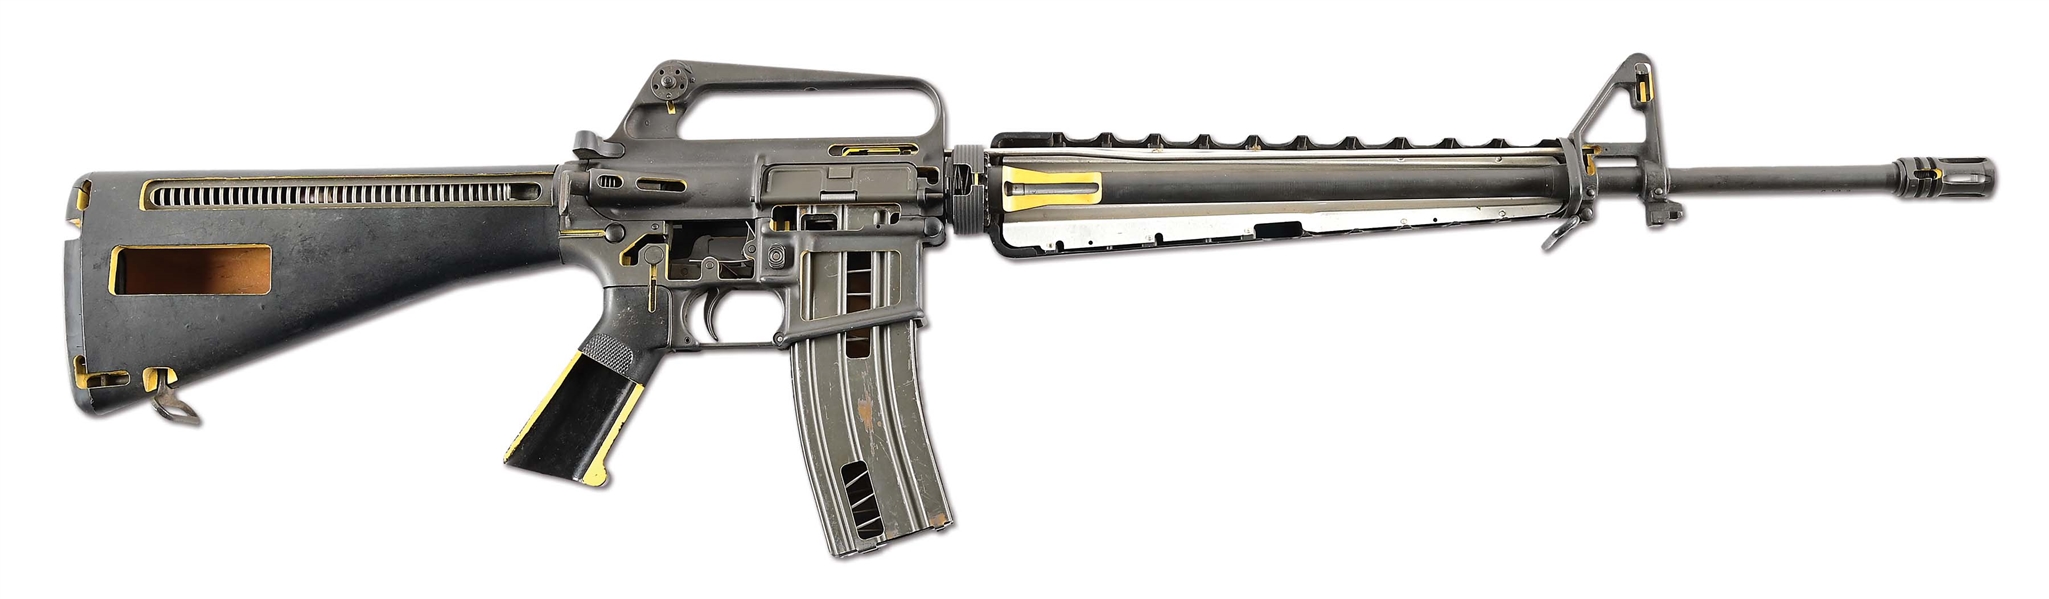 (N) EXCEEDINGLY SCARCE COLT M16 FACTORY CUT-AWAY MACHINE GUN (FULLY TRANSFERABLE).